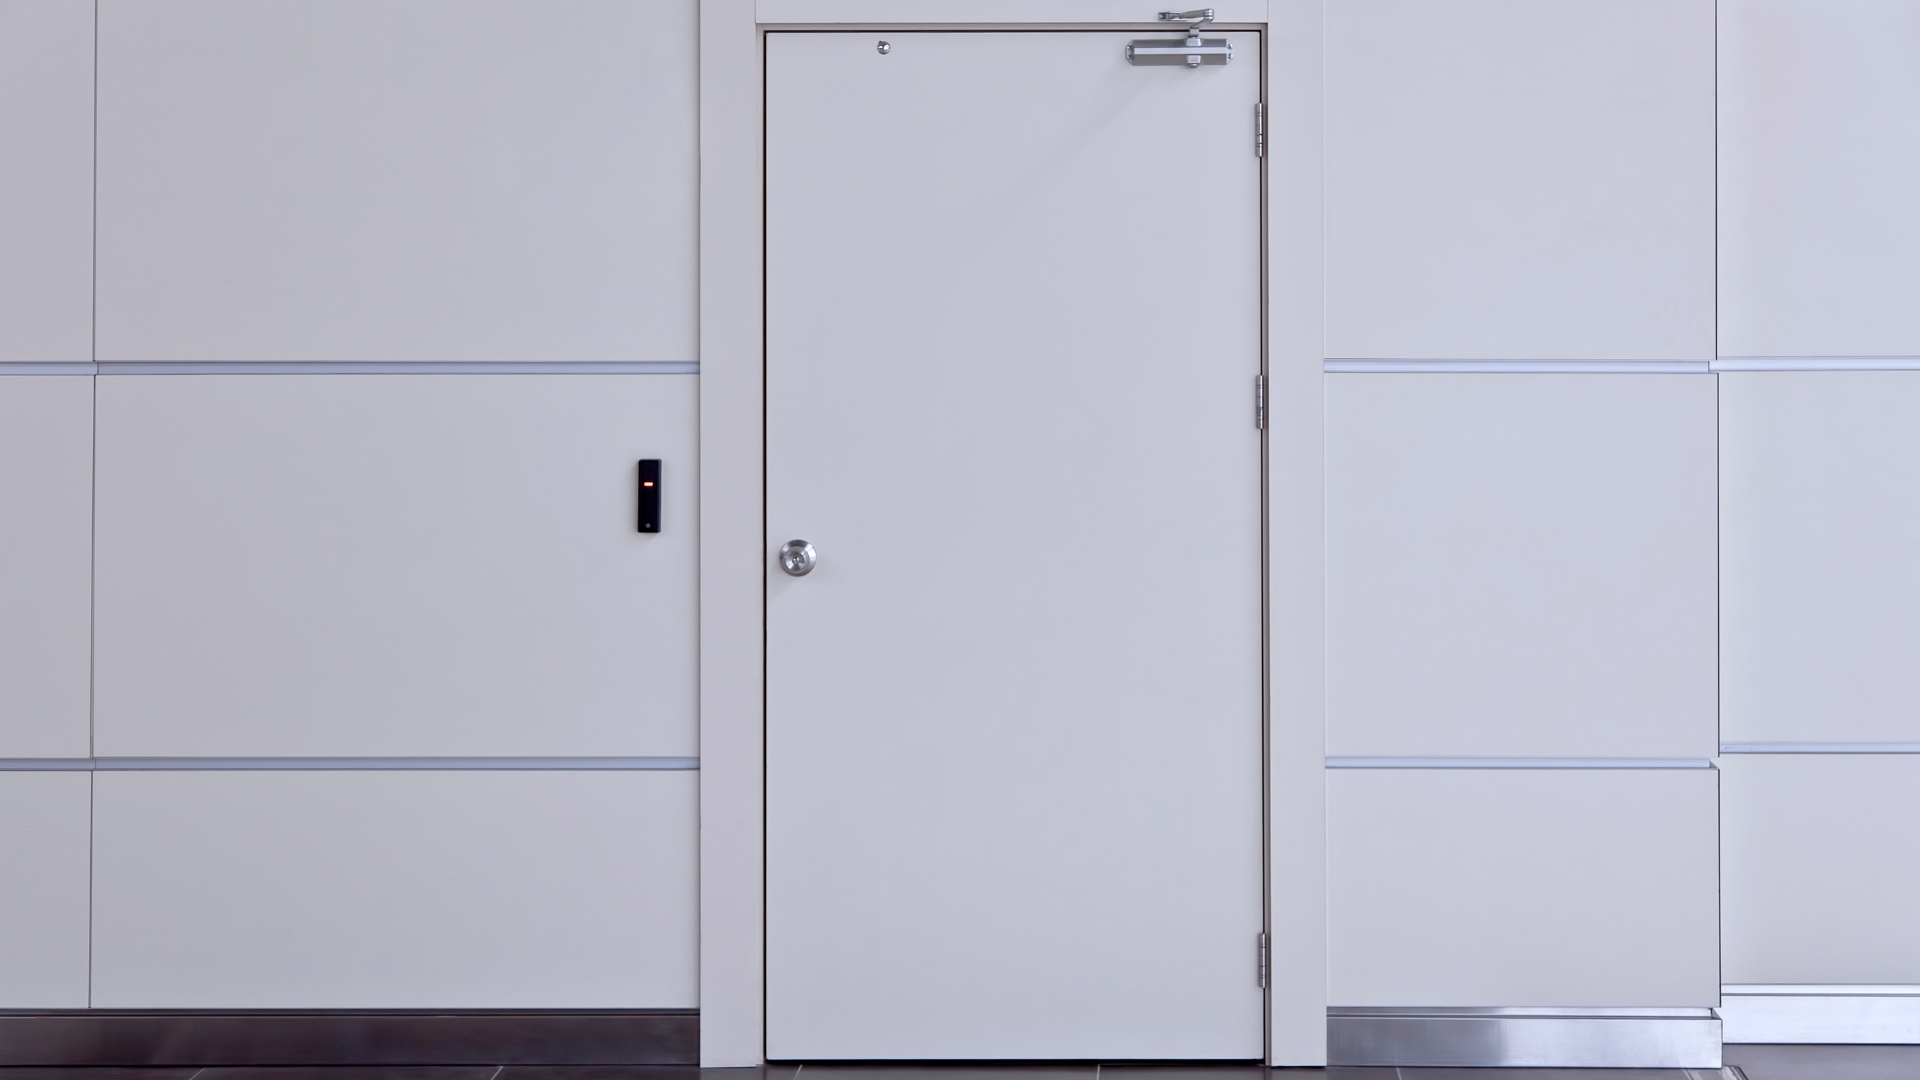 A steel door in white finish